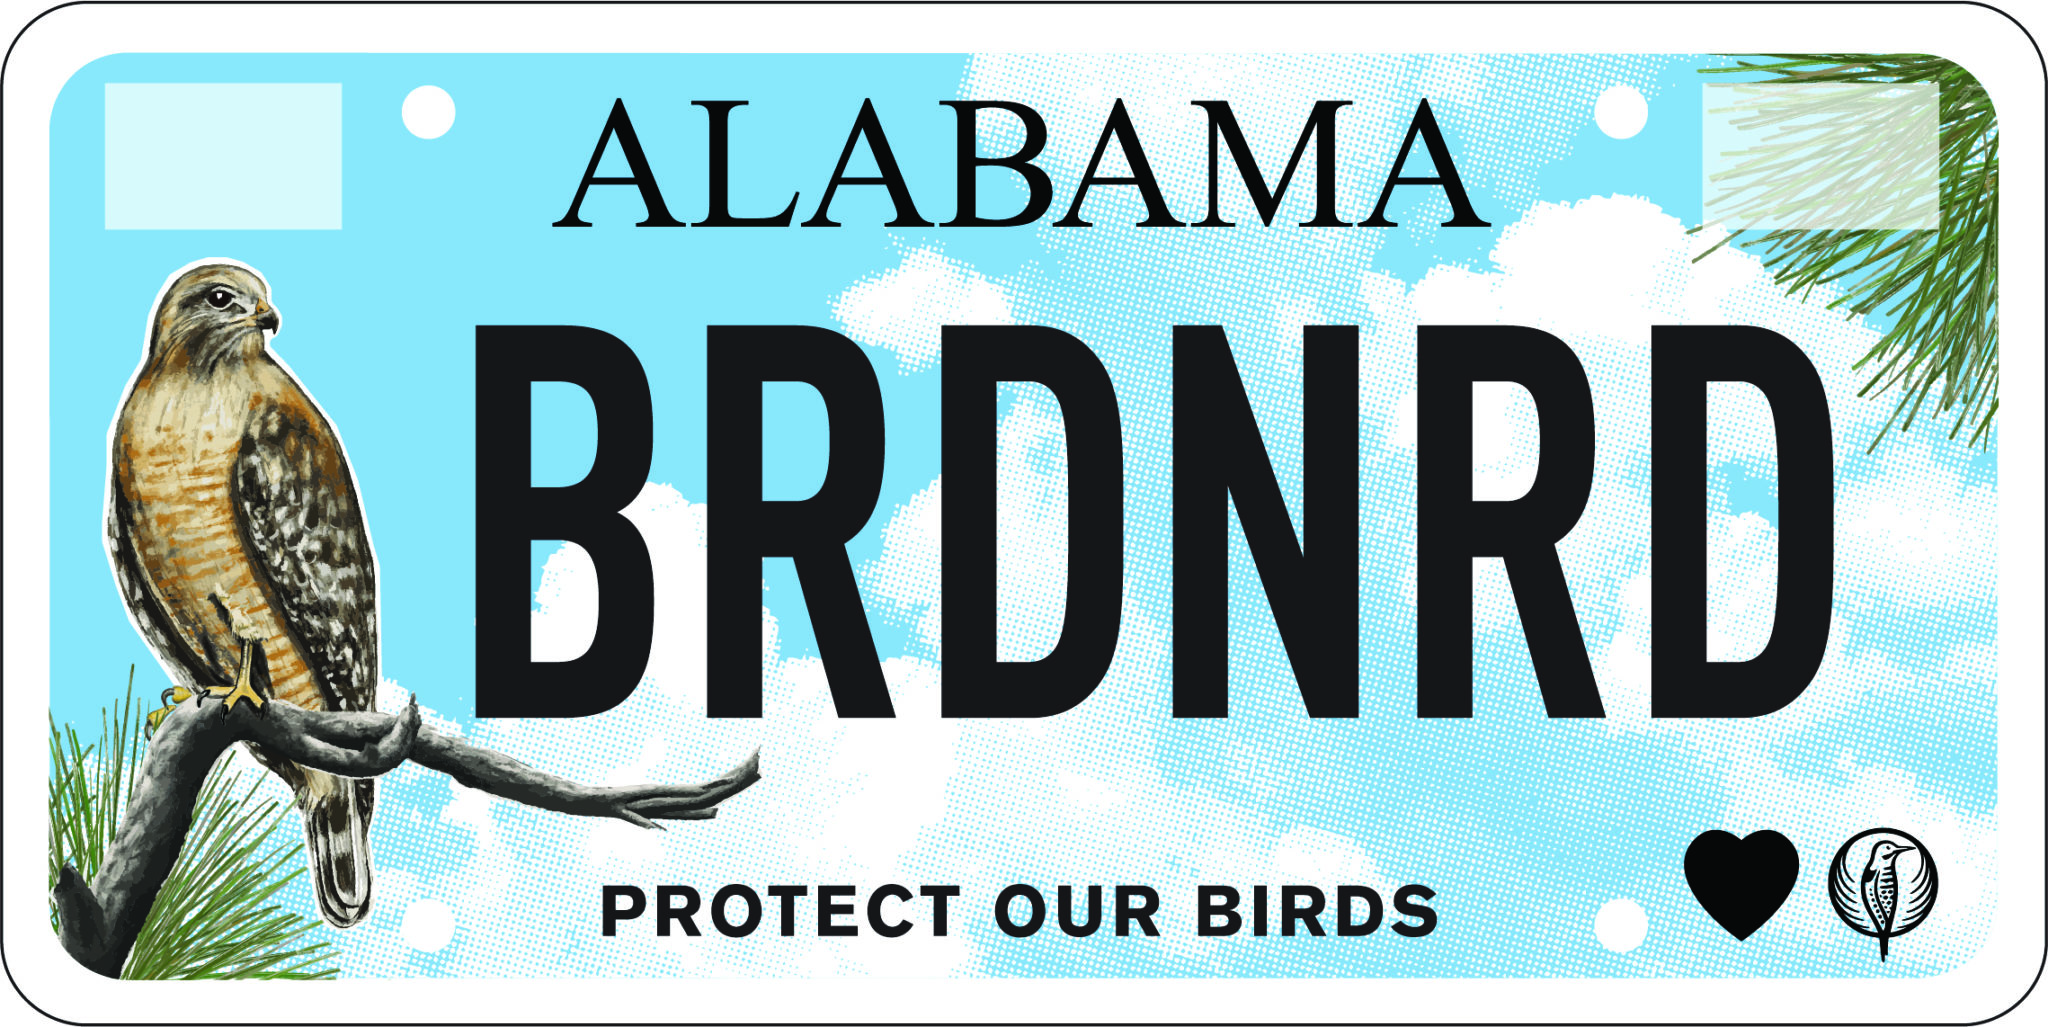 Audubon 7 specialty license plates making Birmingham better